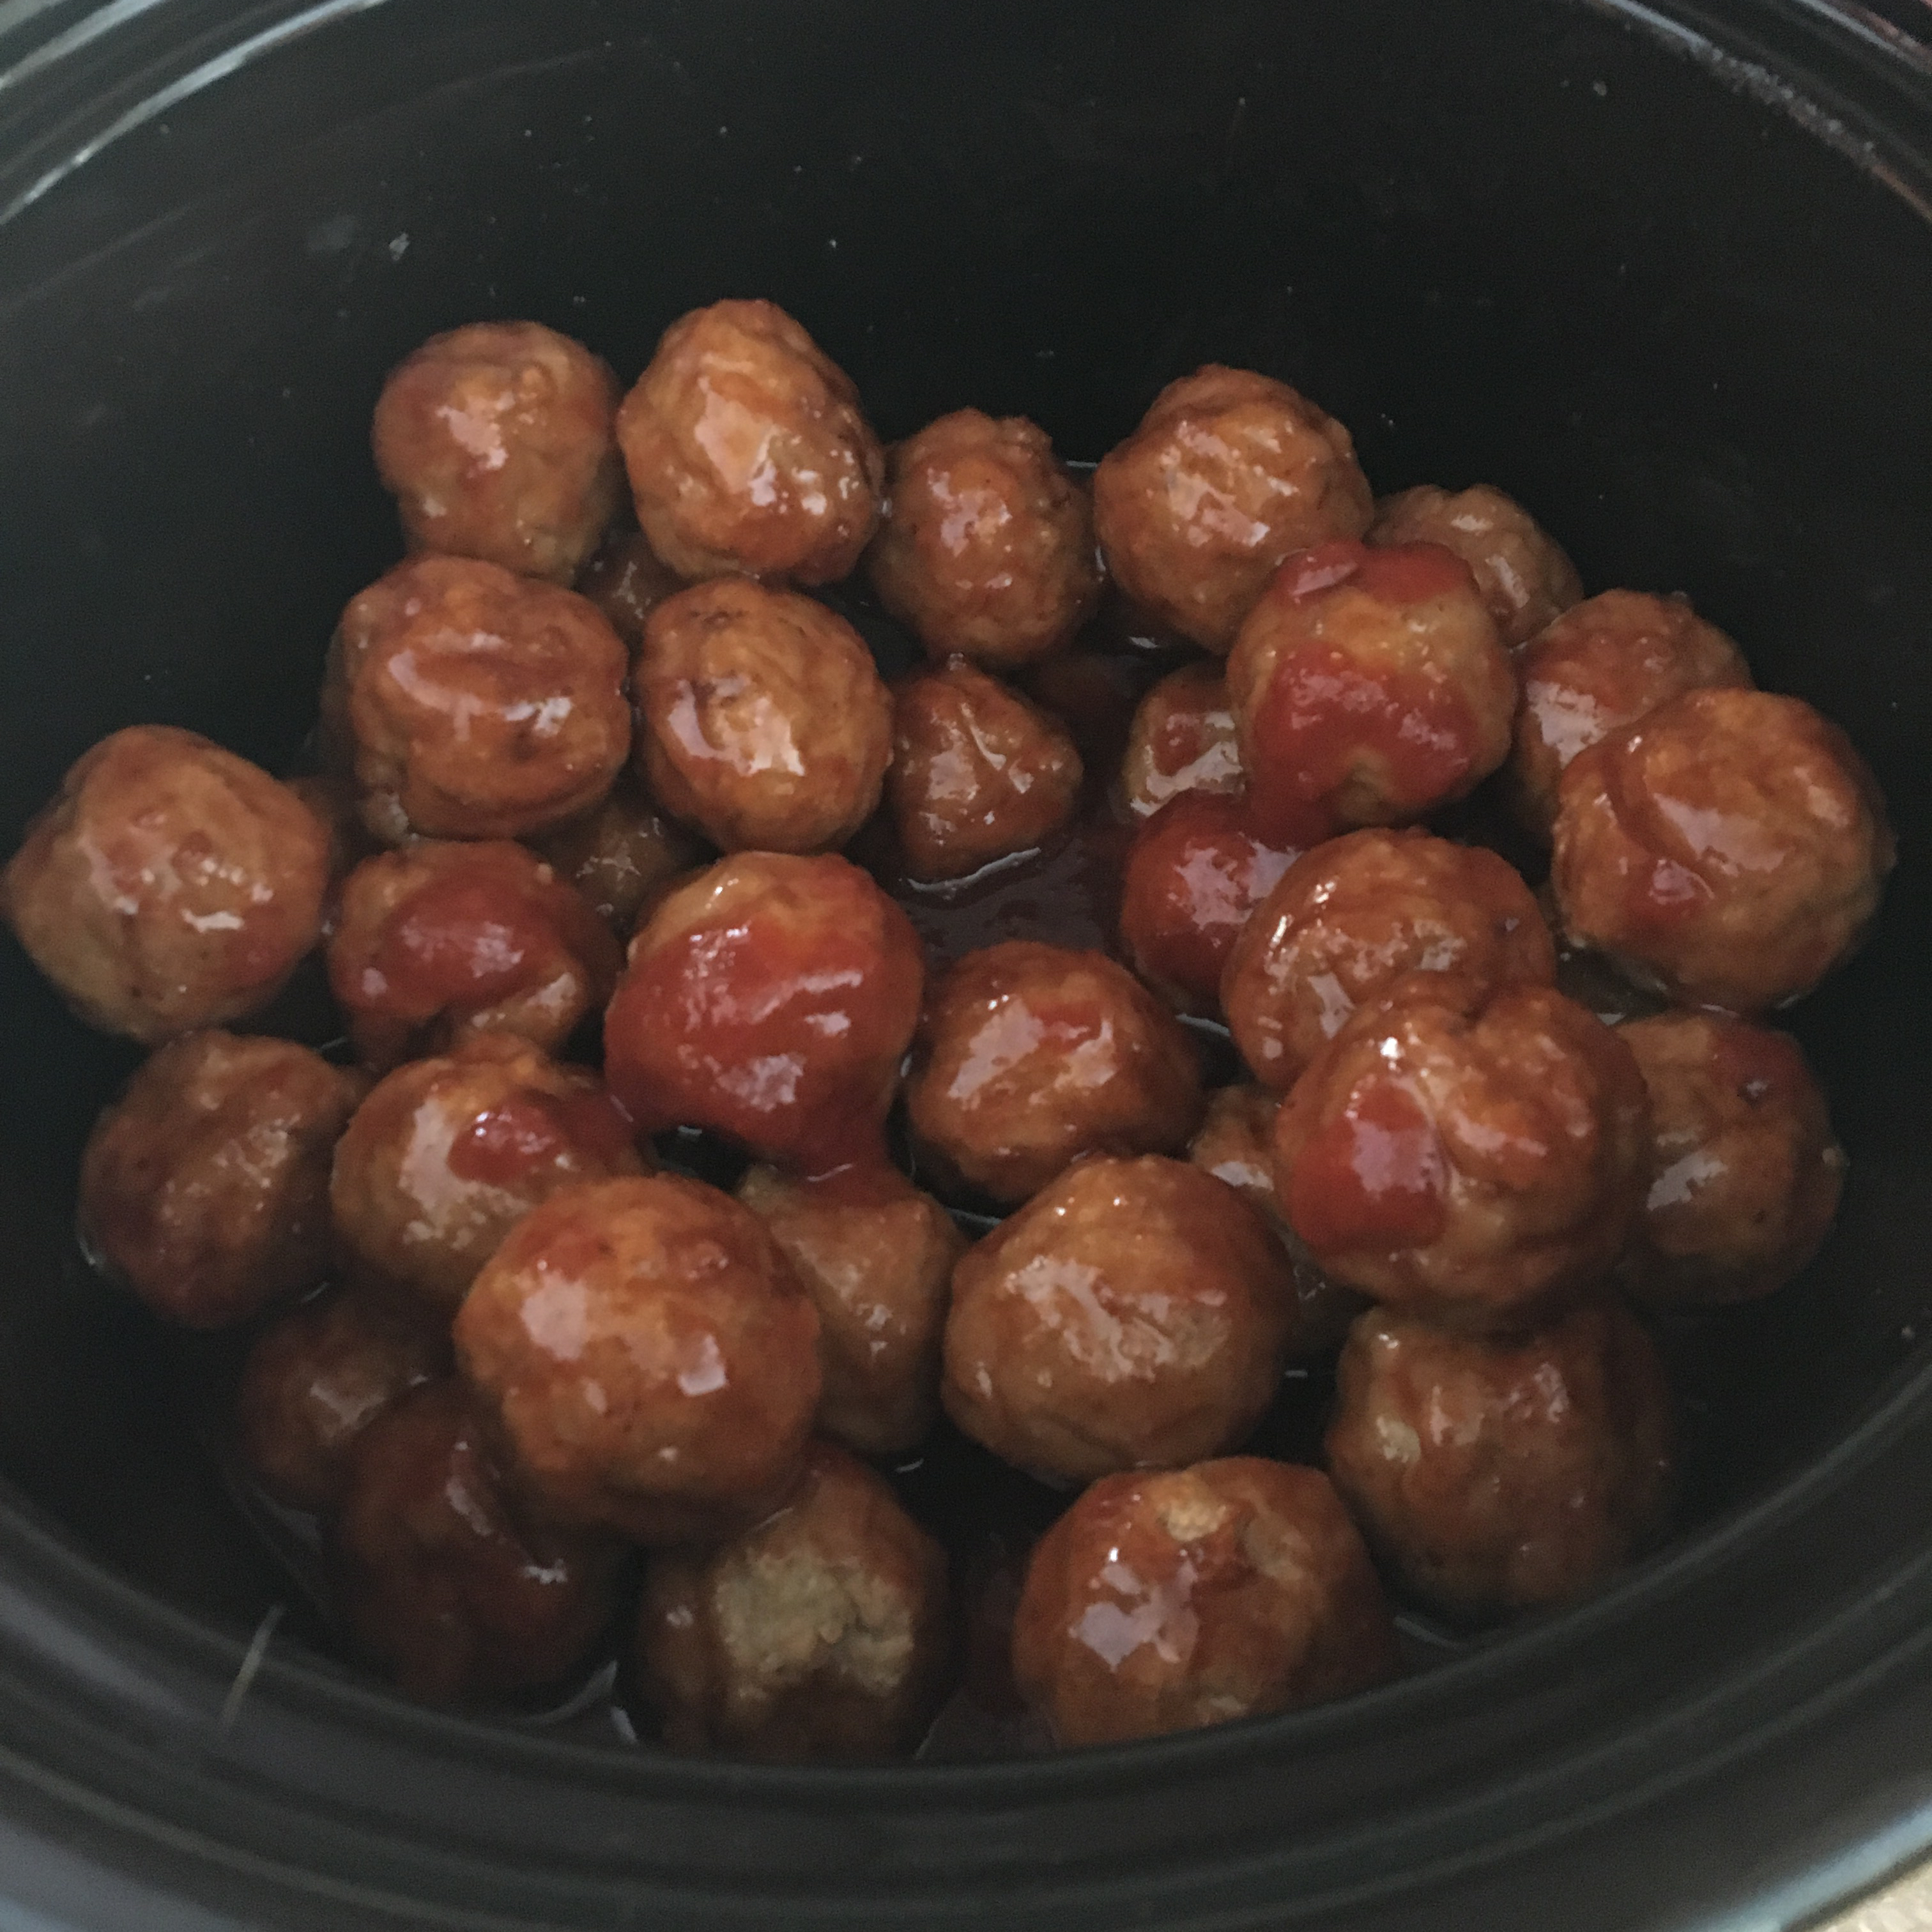 Grape Jelly Meatballs